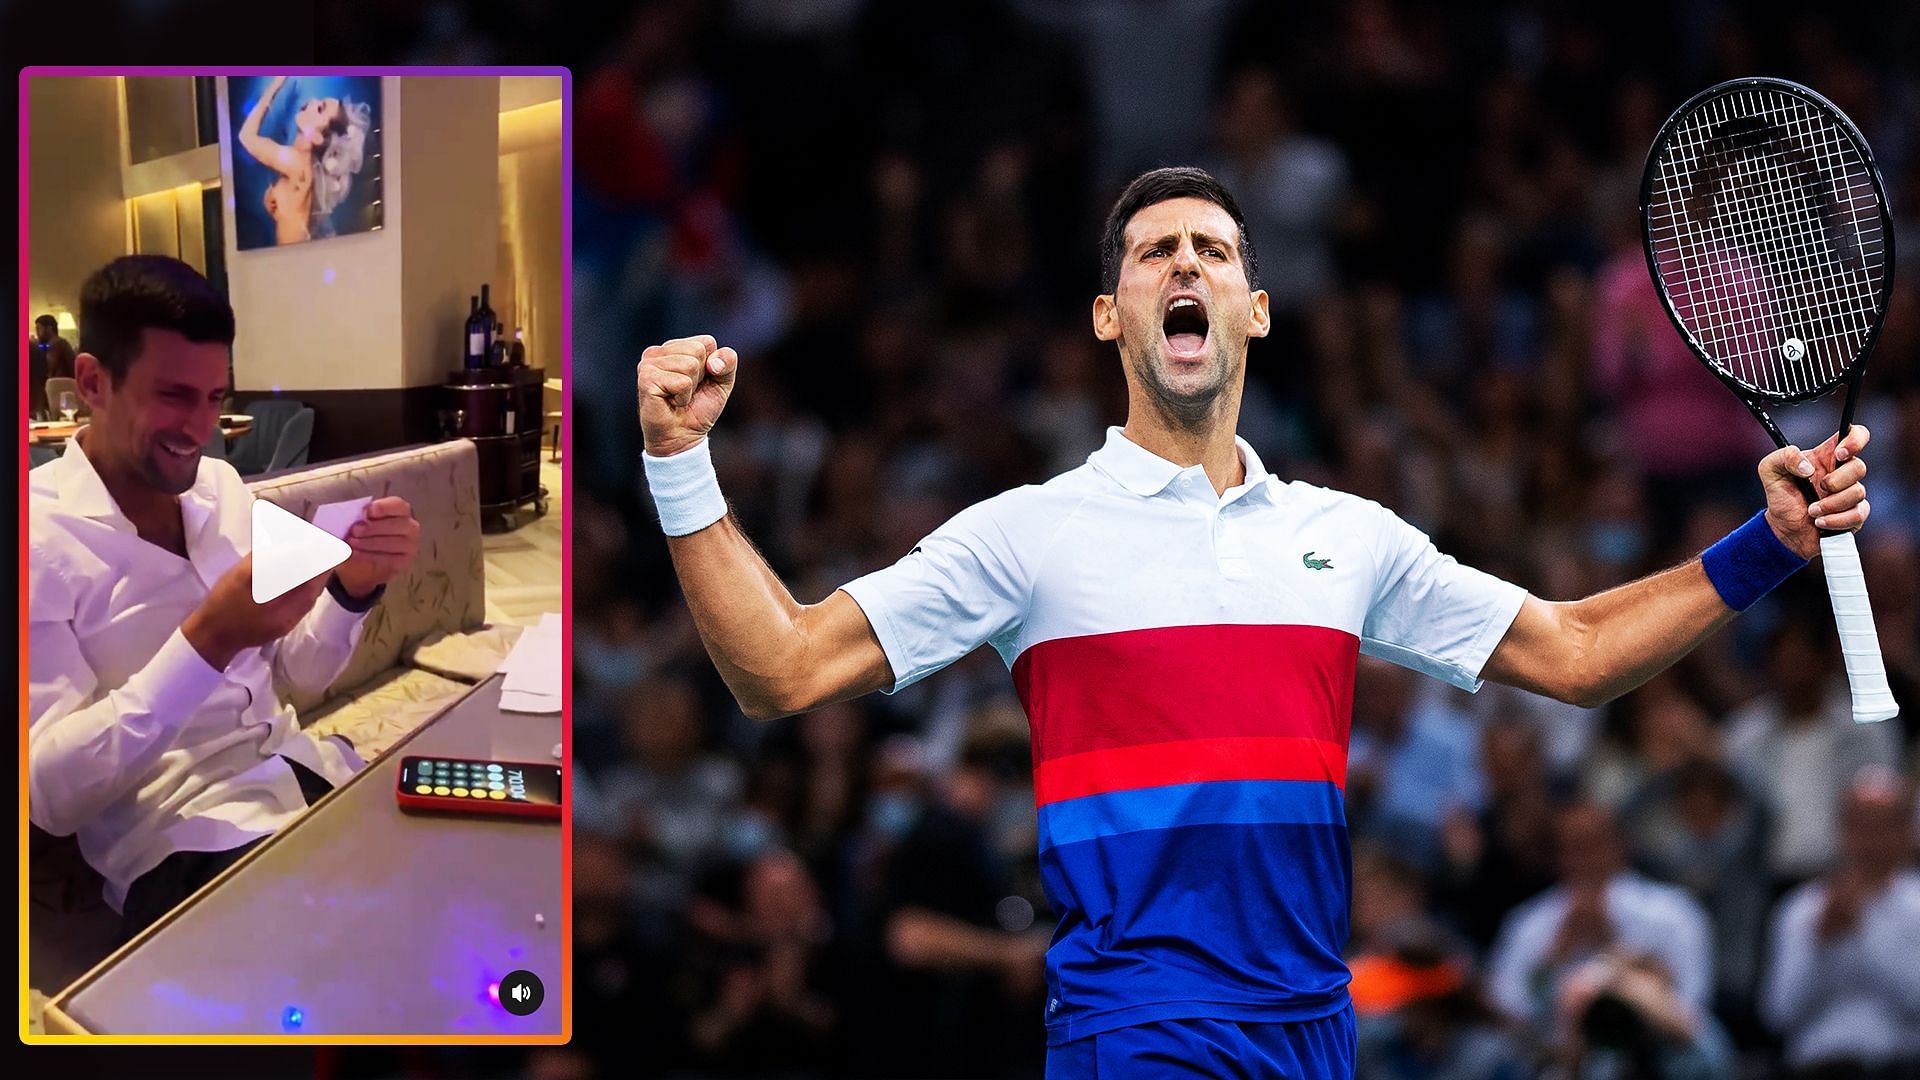 Mentalist Lior Suchard managed to baffle Novak Djokovic during their recent interaction.